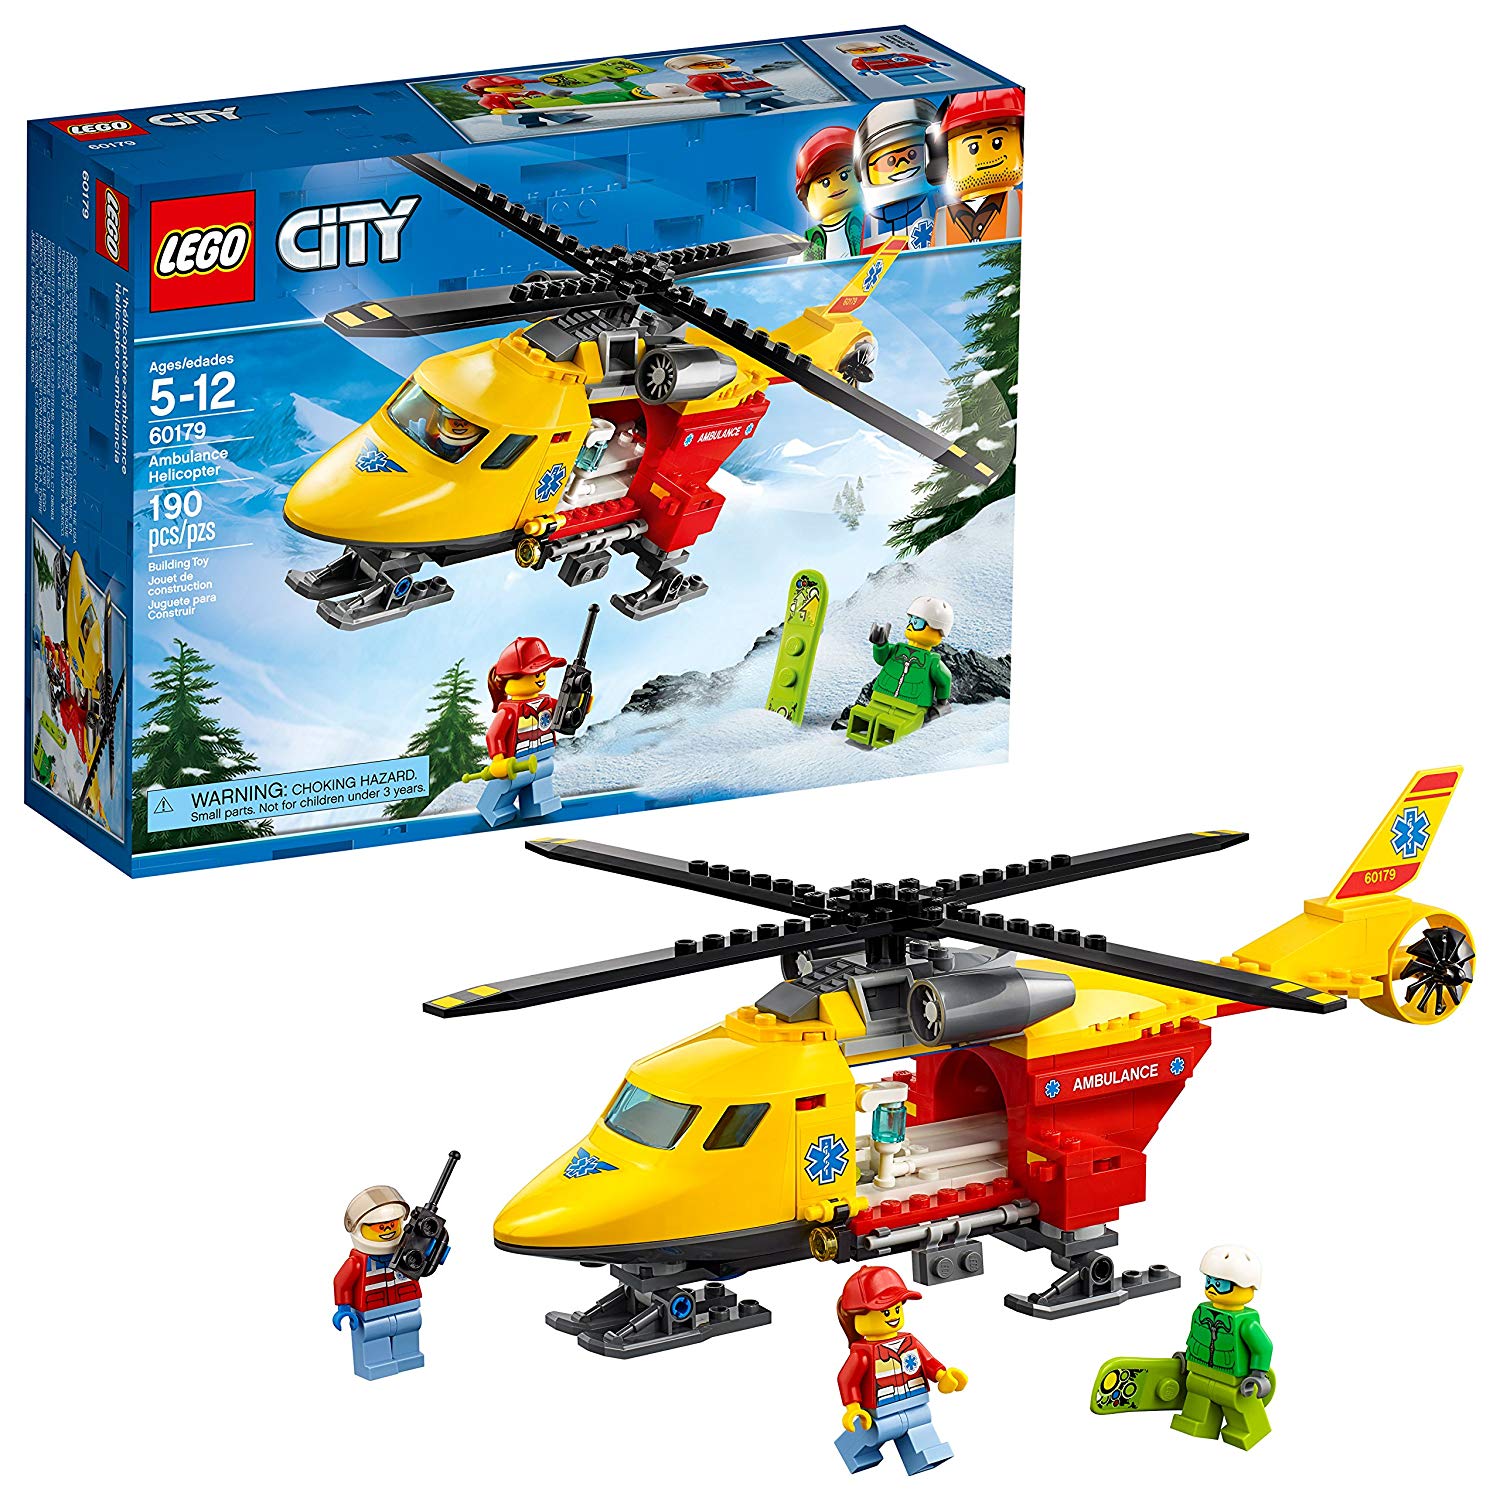 LEGO City Ambulance Helicopter 60179 Building Kit (190 Piece) $11.99 (REG $19.99)